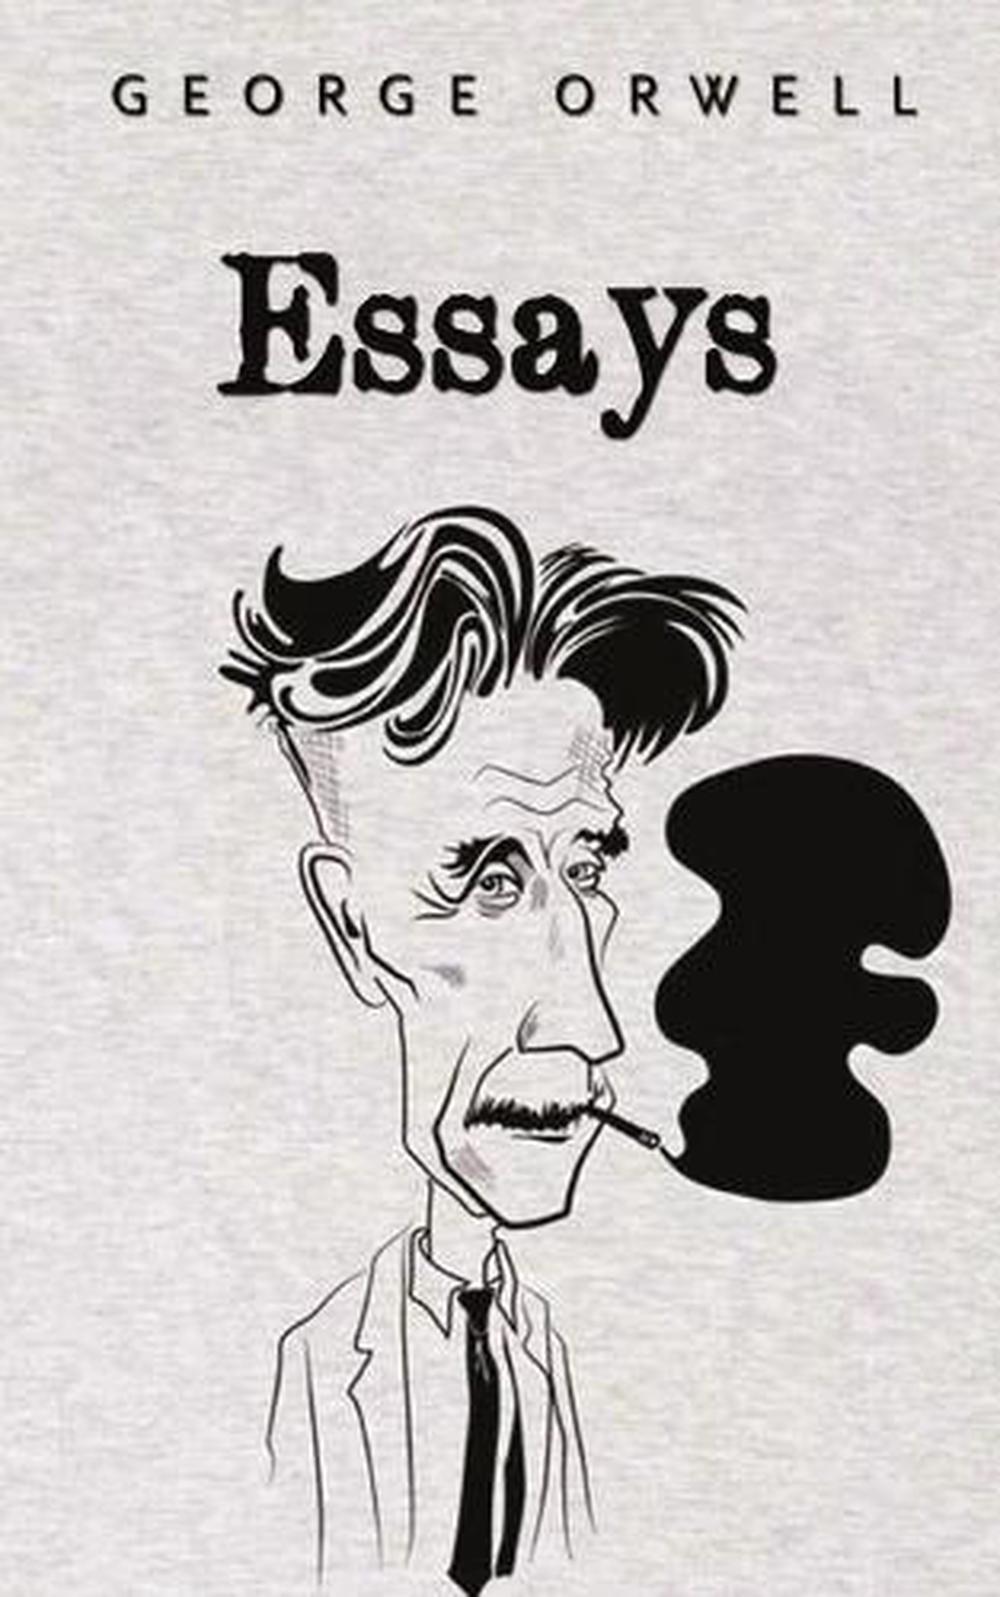 selected essays george orwell